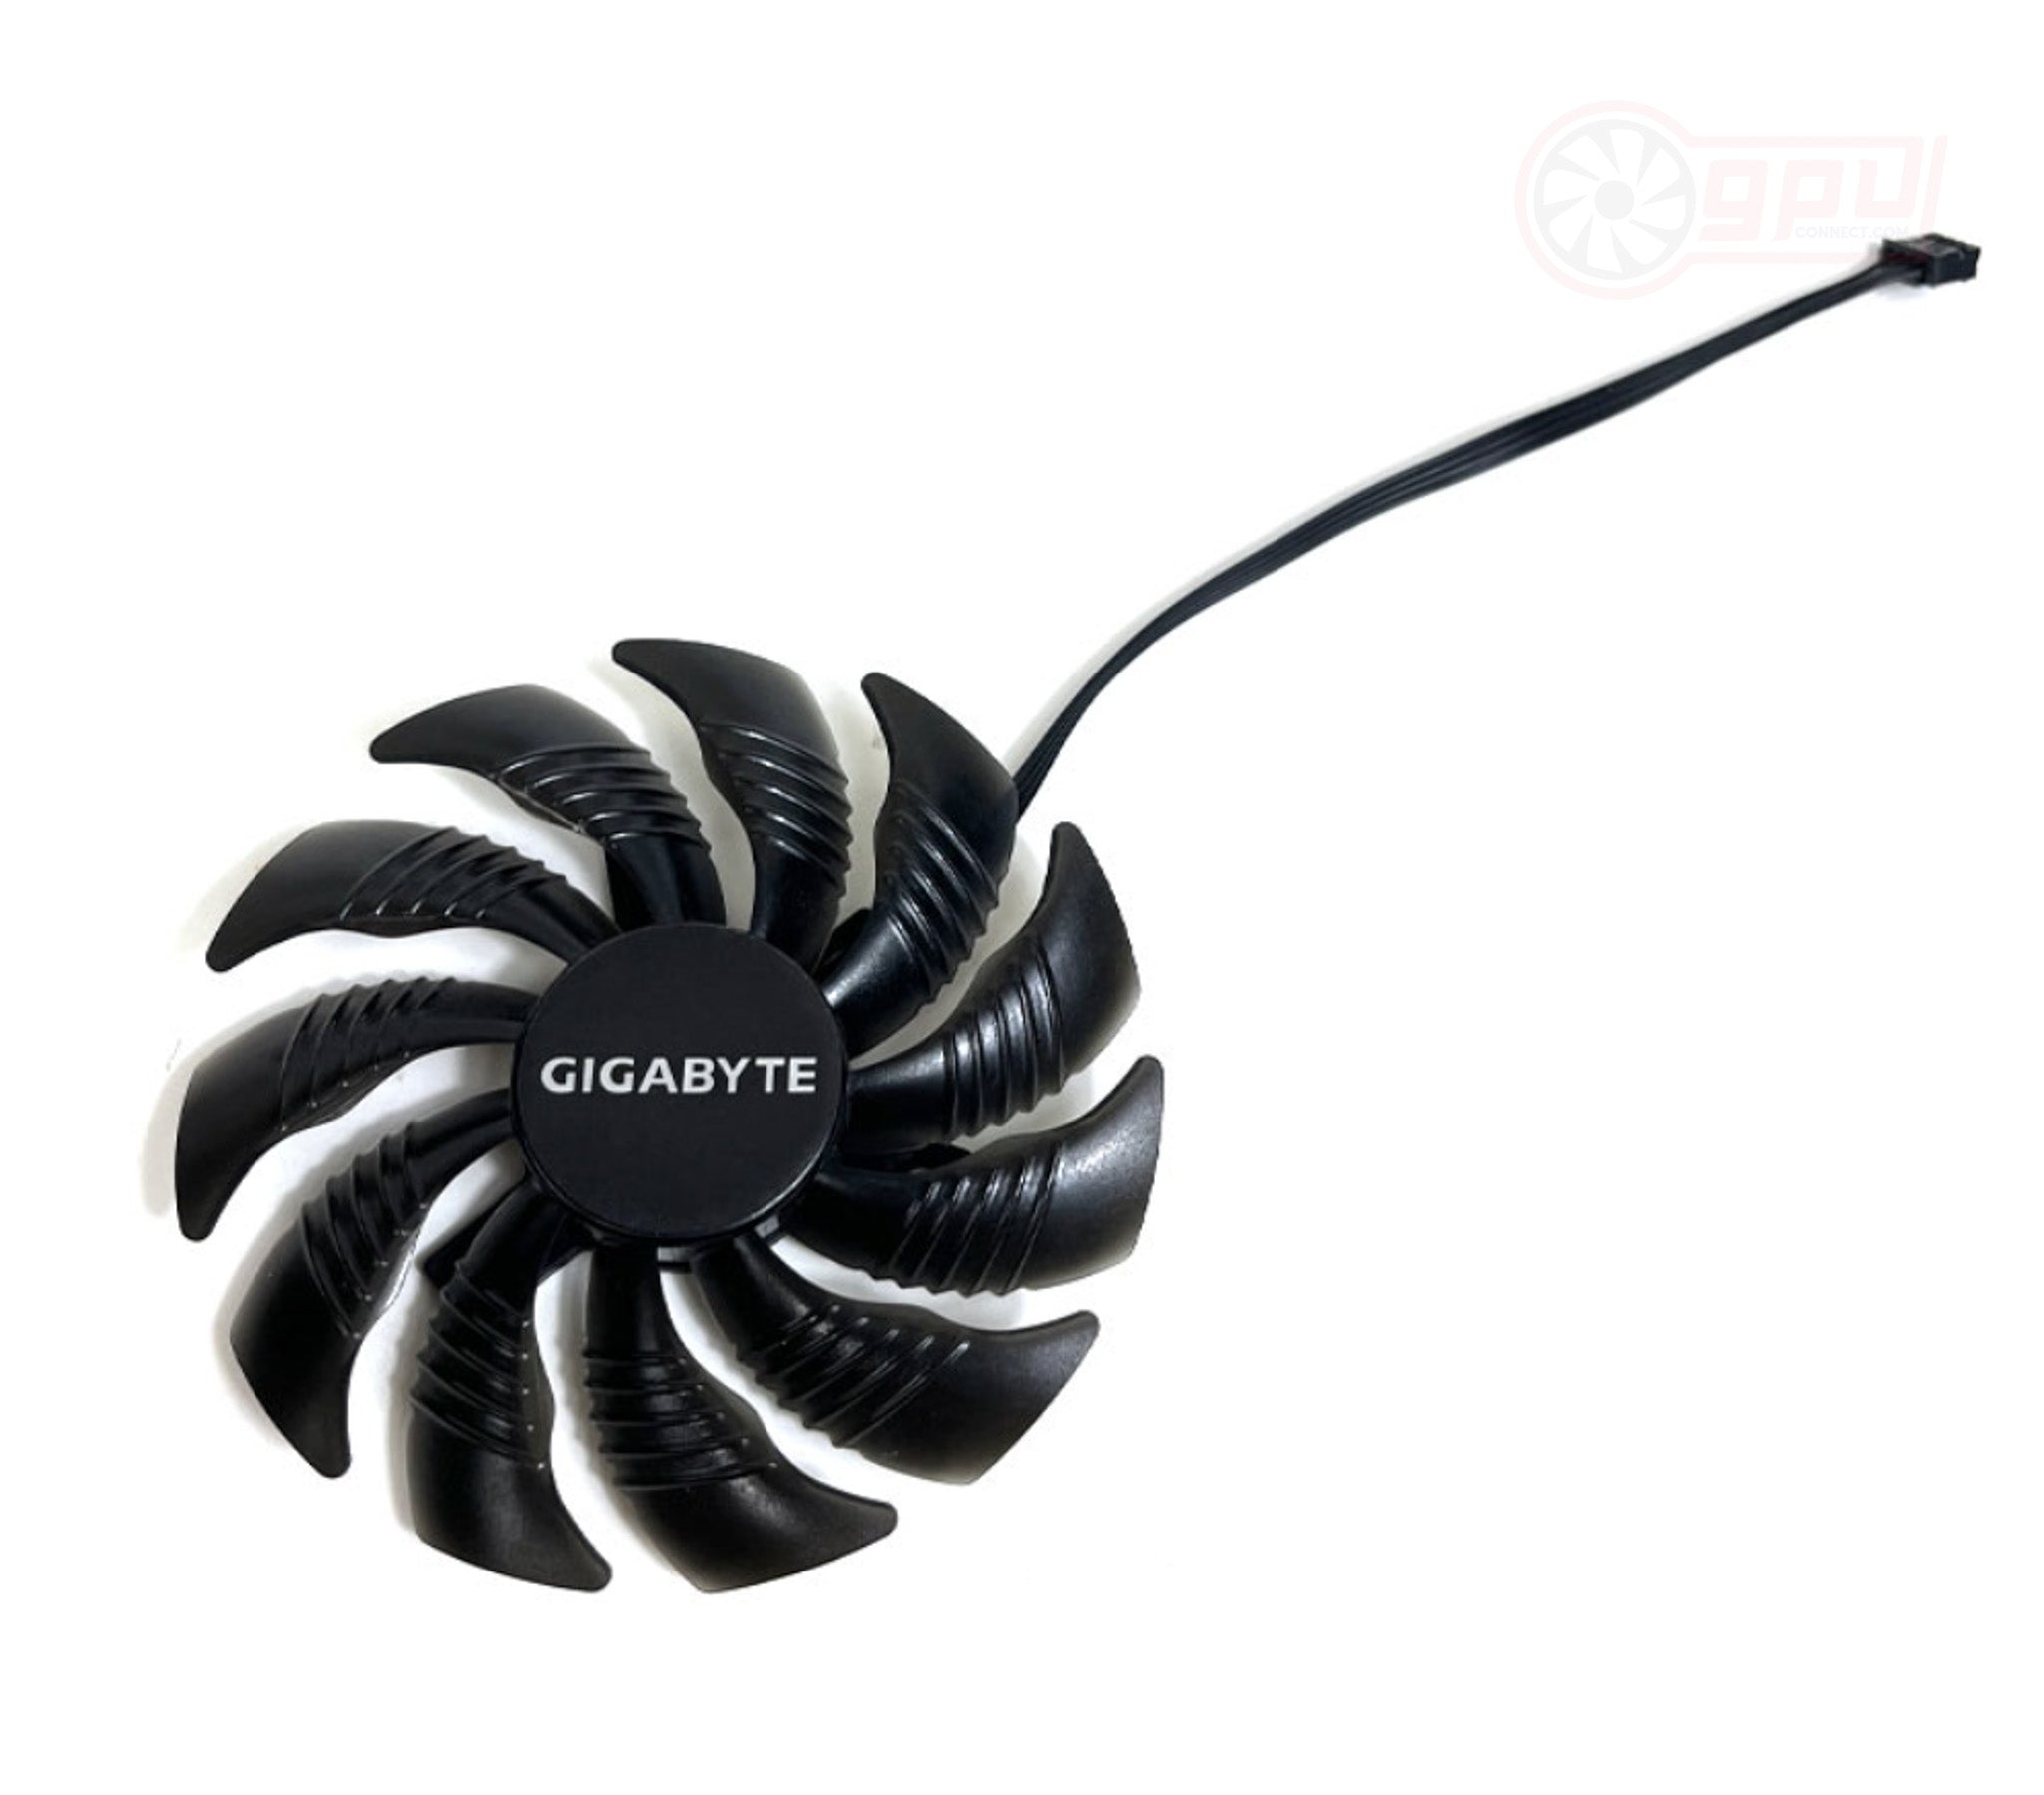 GIGABYTE GTX 1060 1070 1080 MINI ITX OC Replacement Cooling Fan